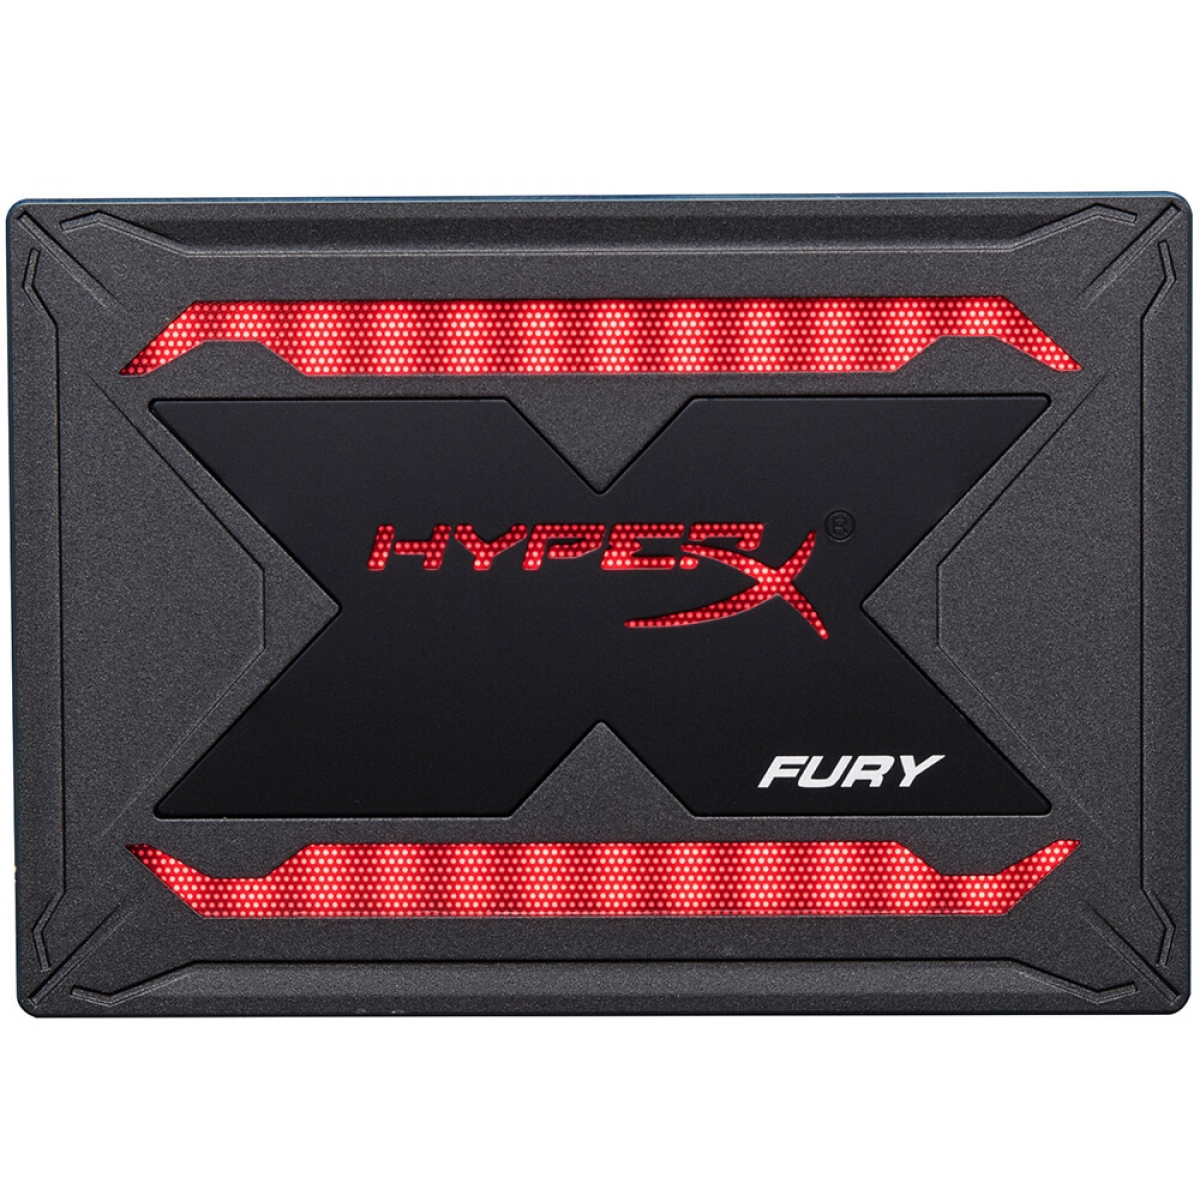 SSD Kingston Hyperx Fury RGB, 480GB, Sata III, Leitura 550MBs e Gravação 480MBs, SHFR200/480G